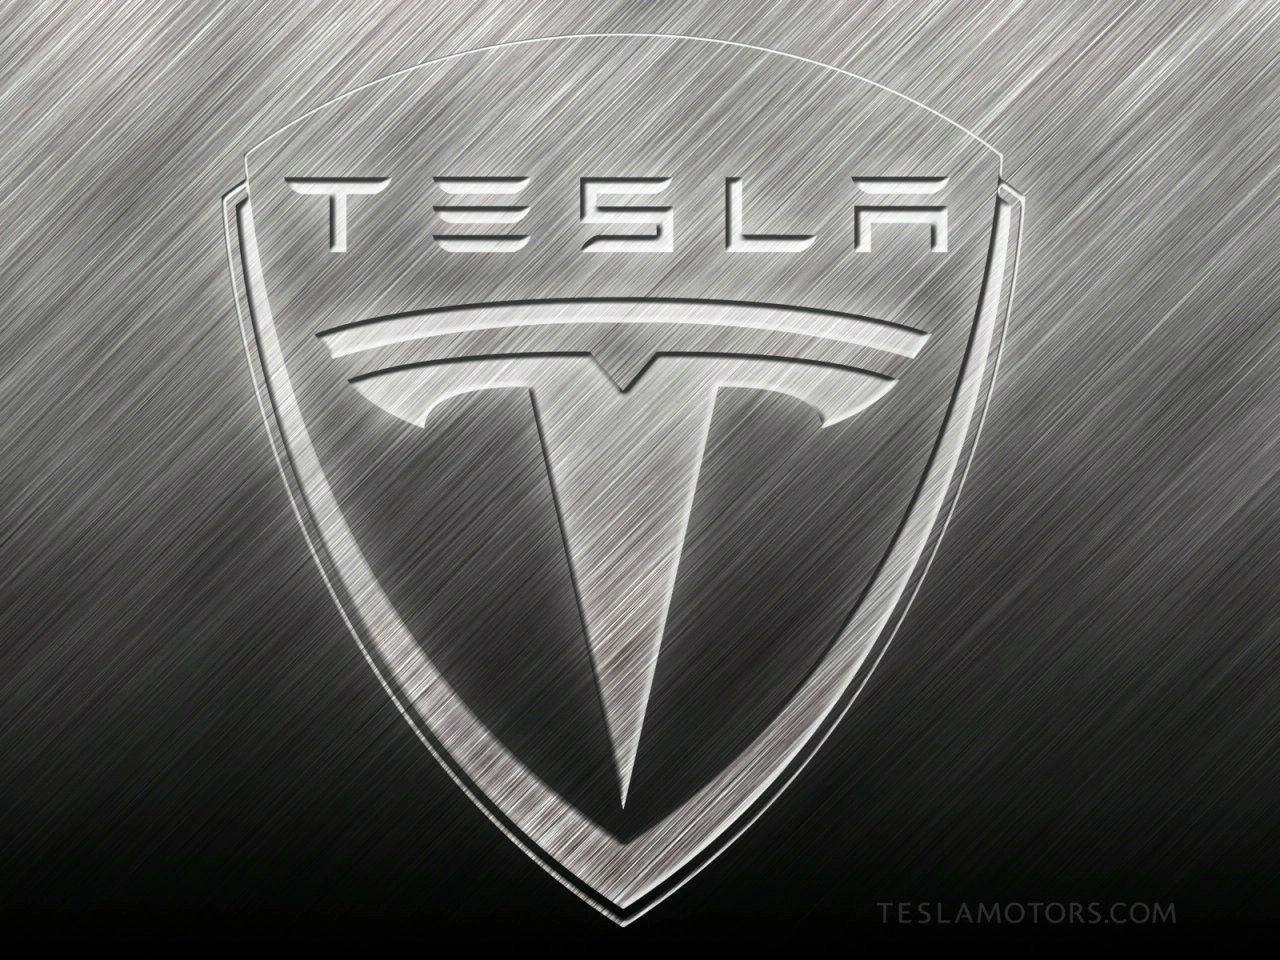 Tesla Motors Logo - Tesla Logo, Tesla Car Symbol Meaning and History | Car Brand Names.com